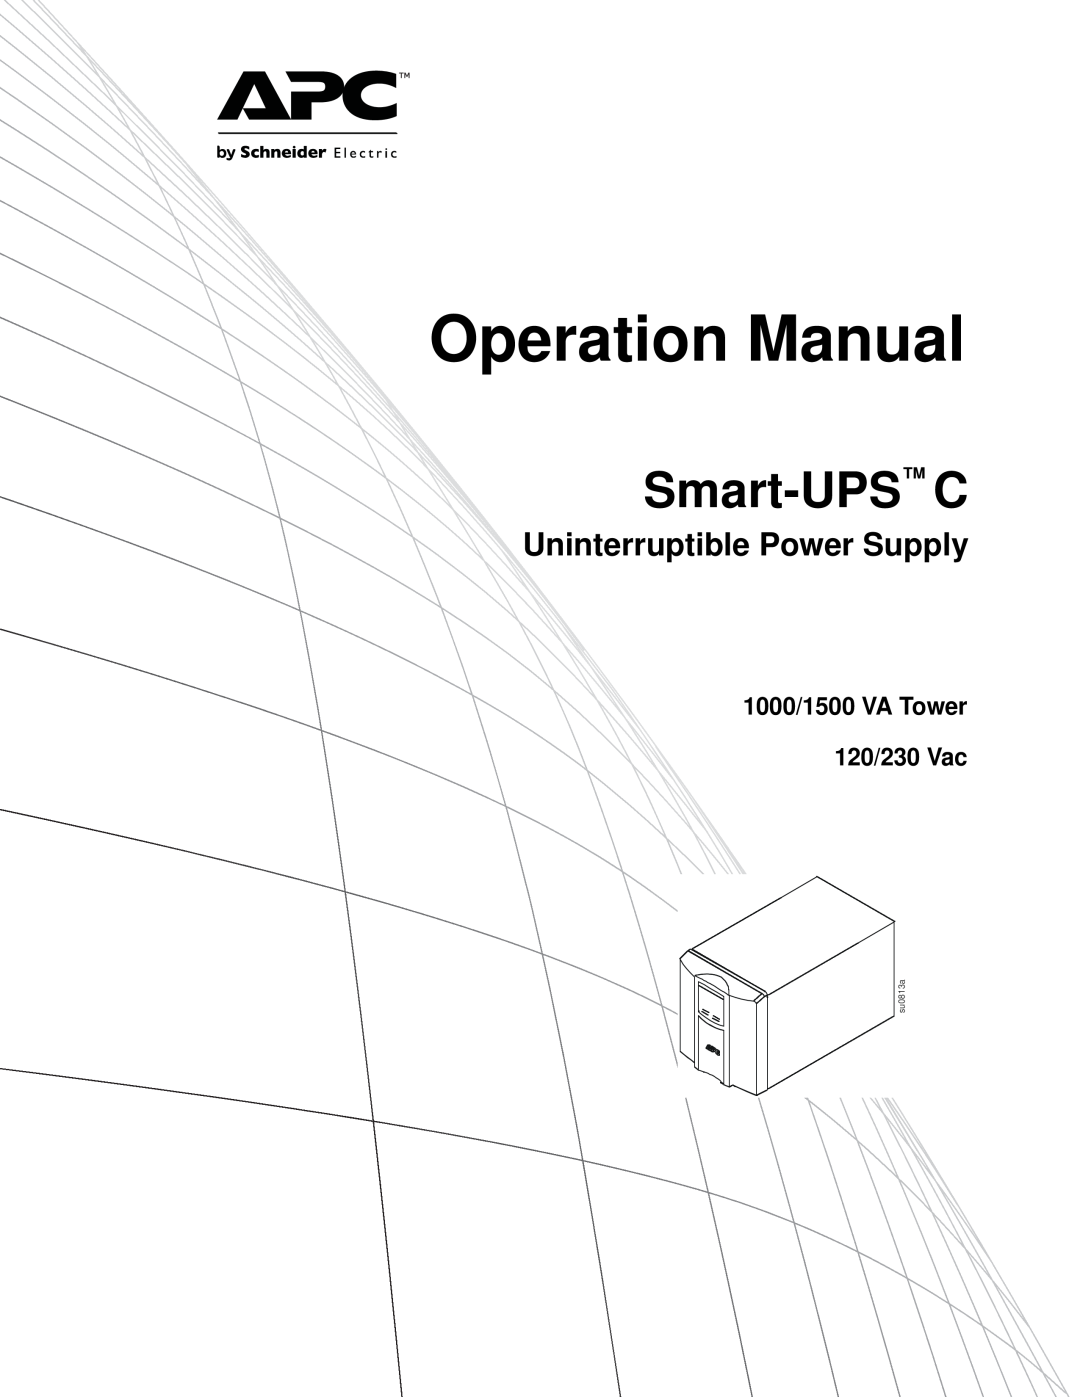 APC SMC1500 operation manual Operation Manual, Smart-UPS C, Uninterruptible Power Supply, 1000/1500 VA Tower 120/230 Vac 